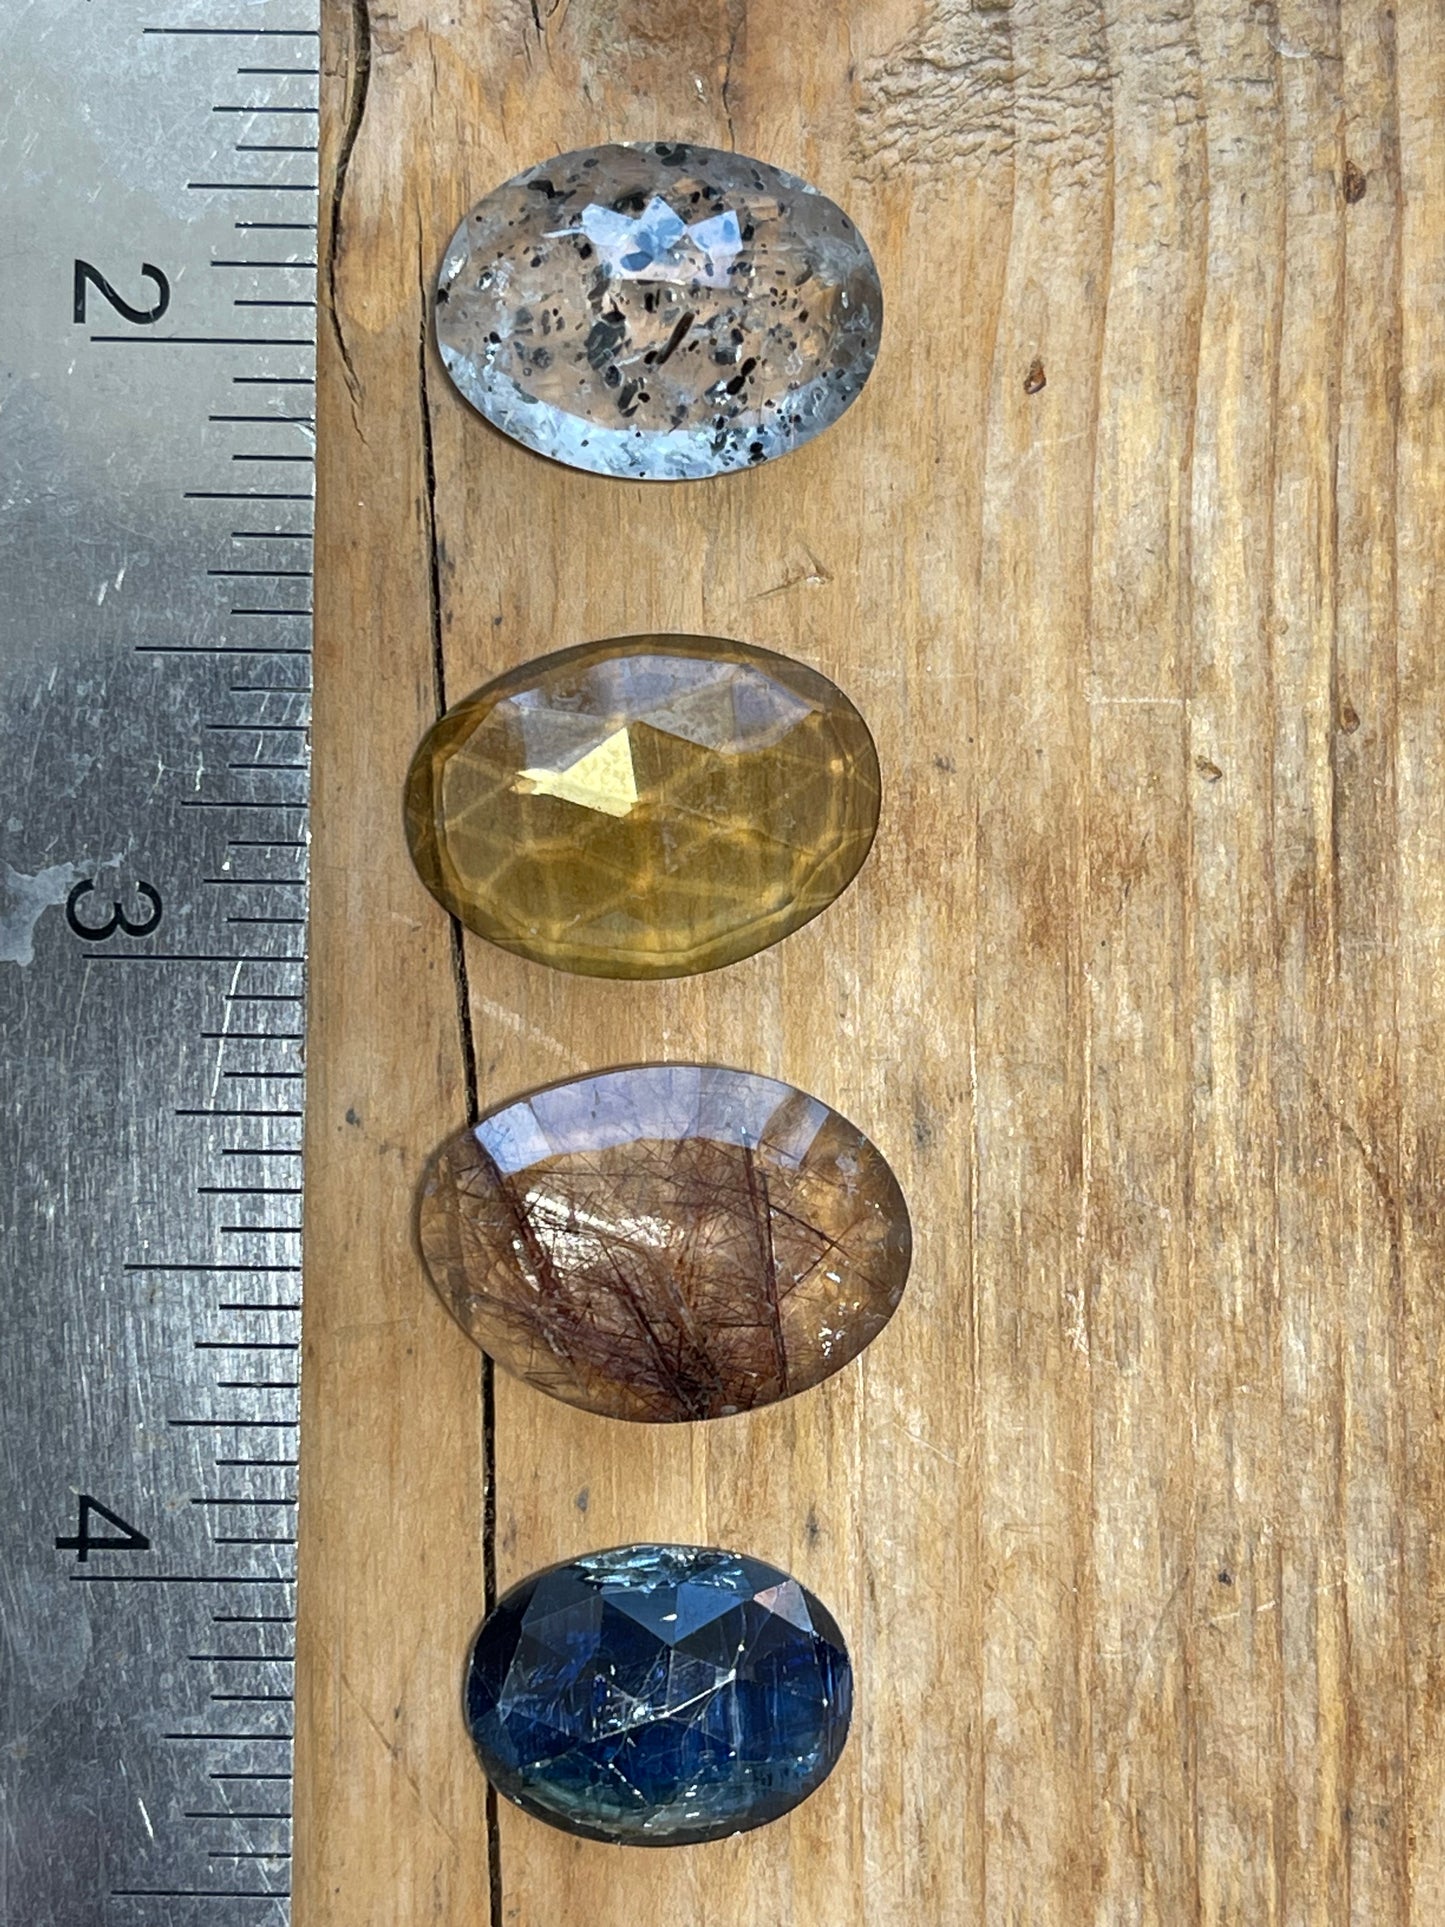 Gemstone Collection 610: Lemon Quartz, Kyanite, Red Rutilated Quartz, Clear Speckled Agate - 37CT (G610)